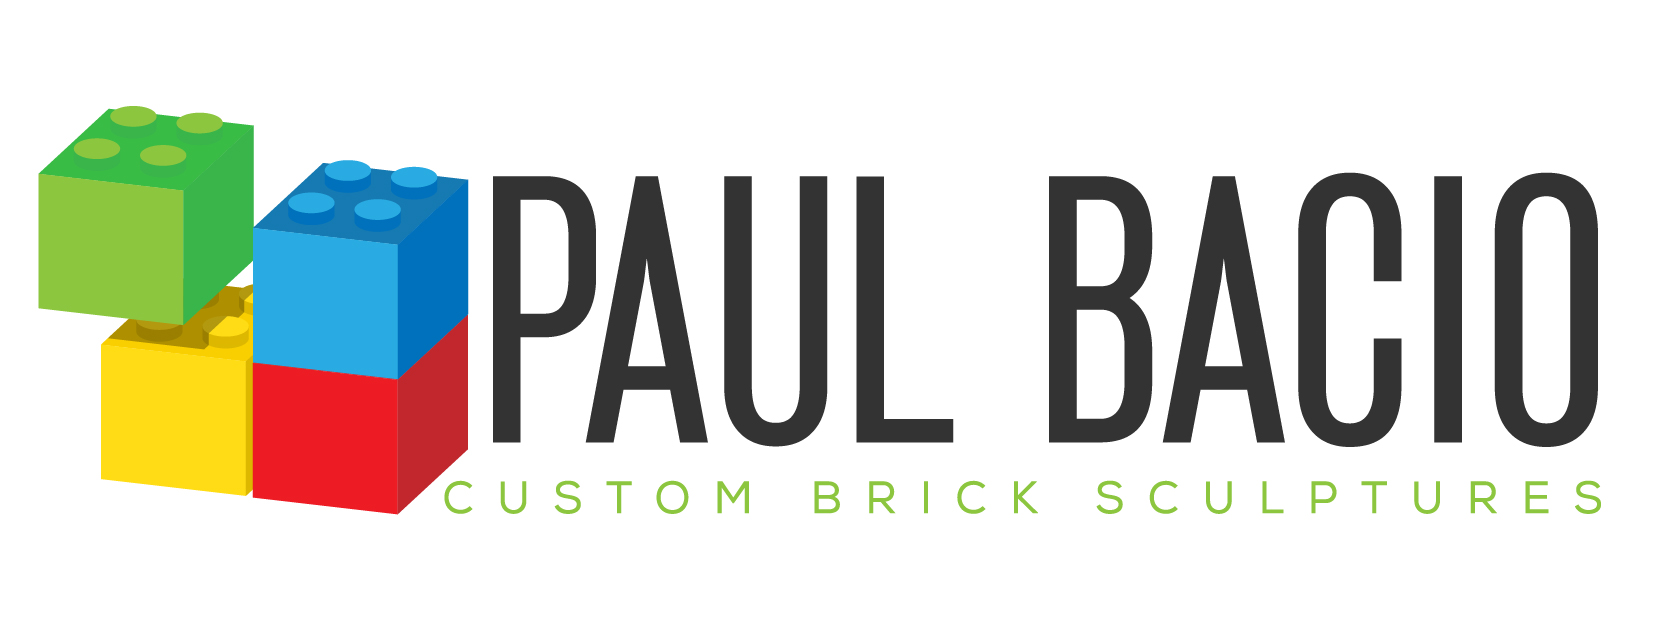 Custom Brick Sculptures | Paul Bacio